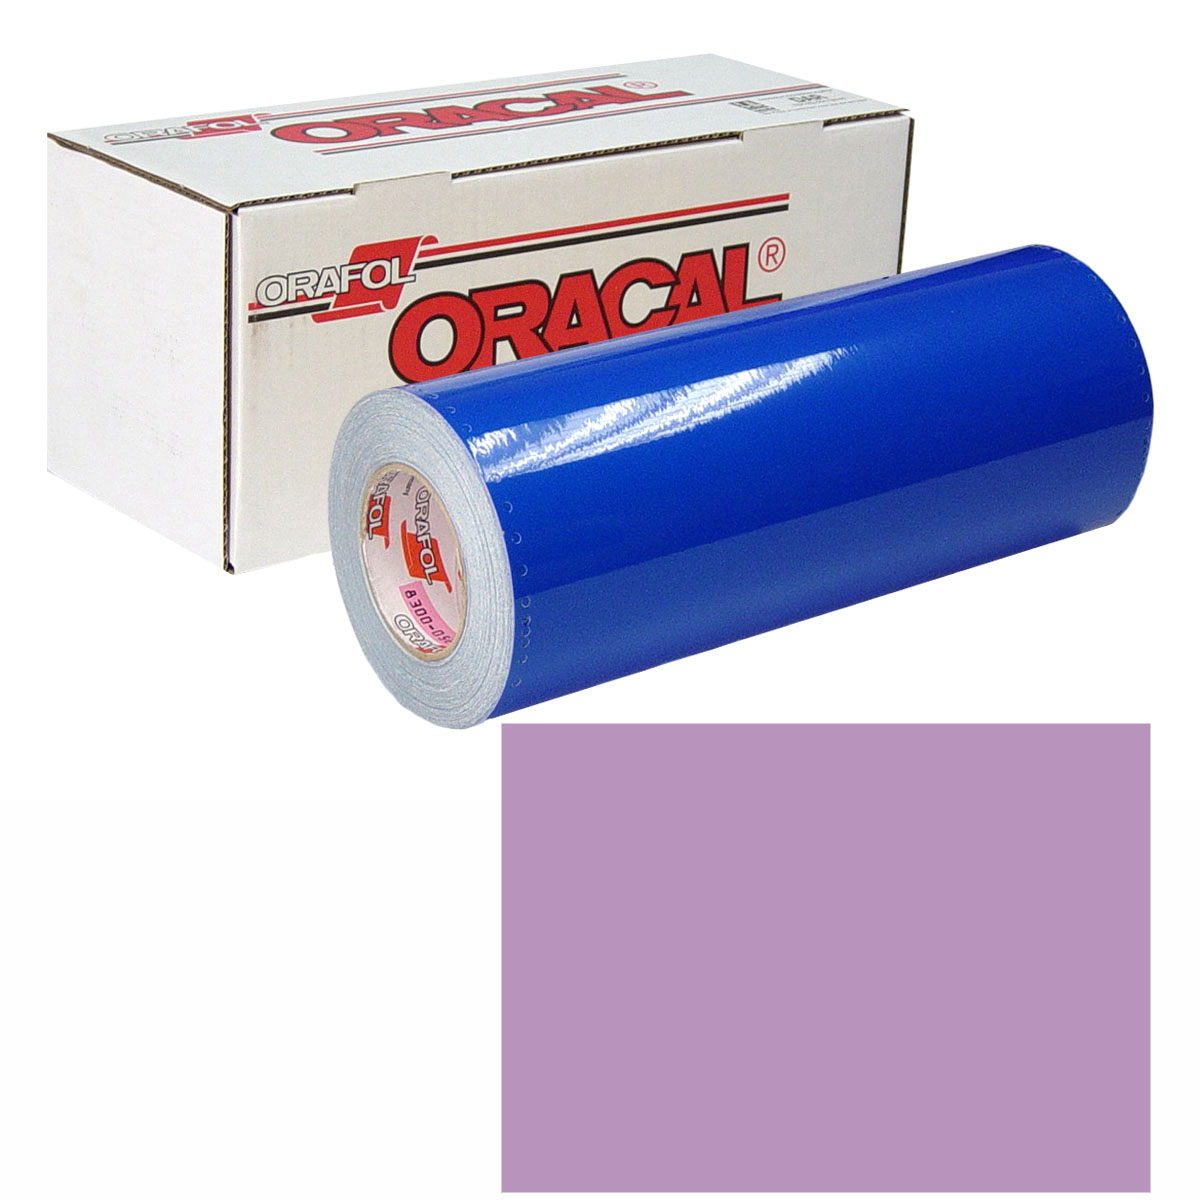 ORACAL 631 Unp 48in X 50yd 042 Lilac